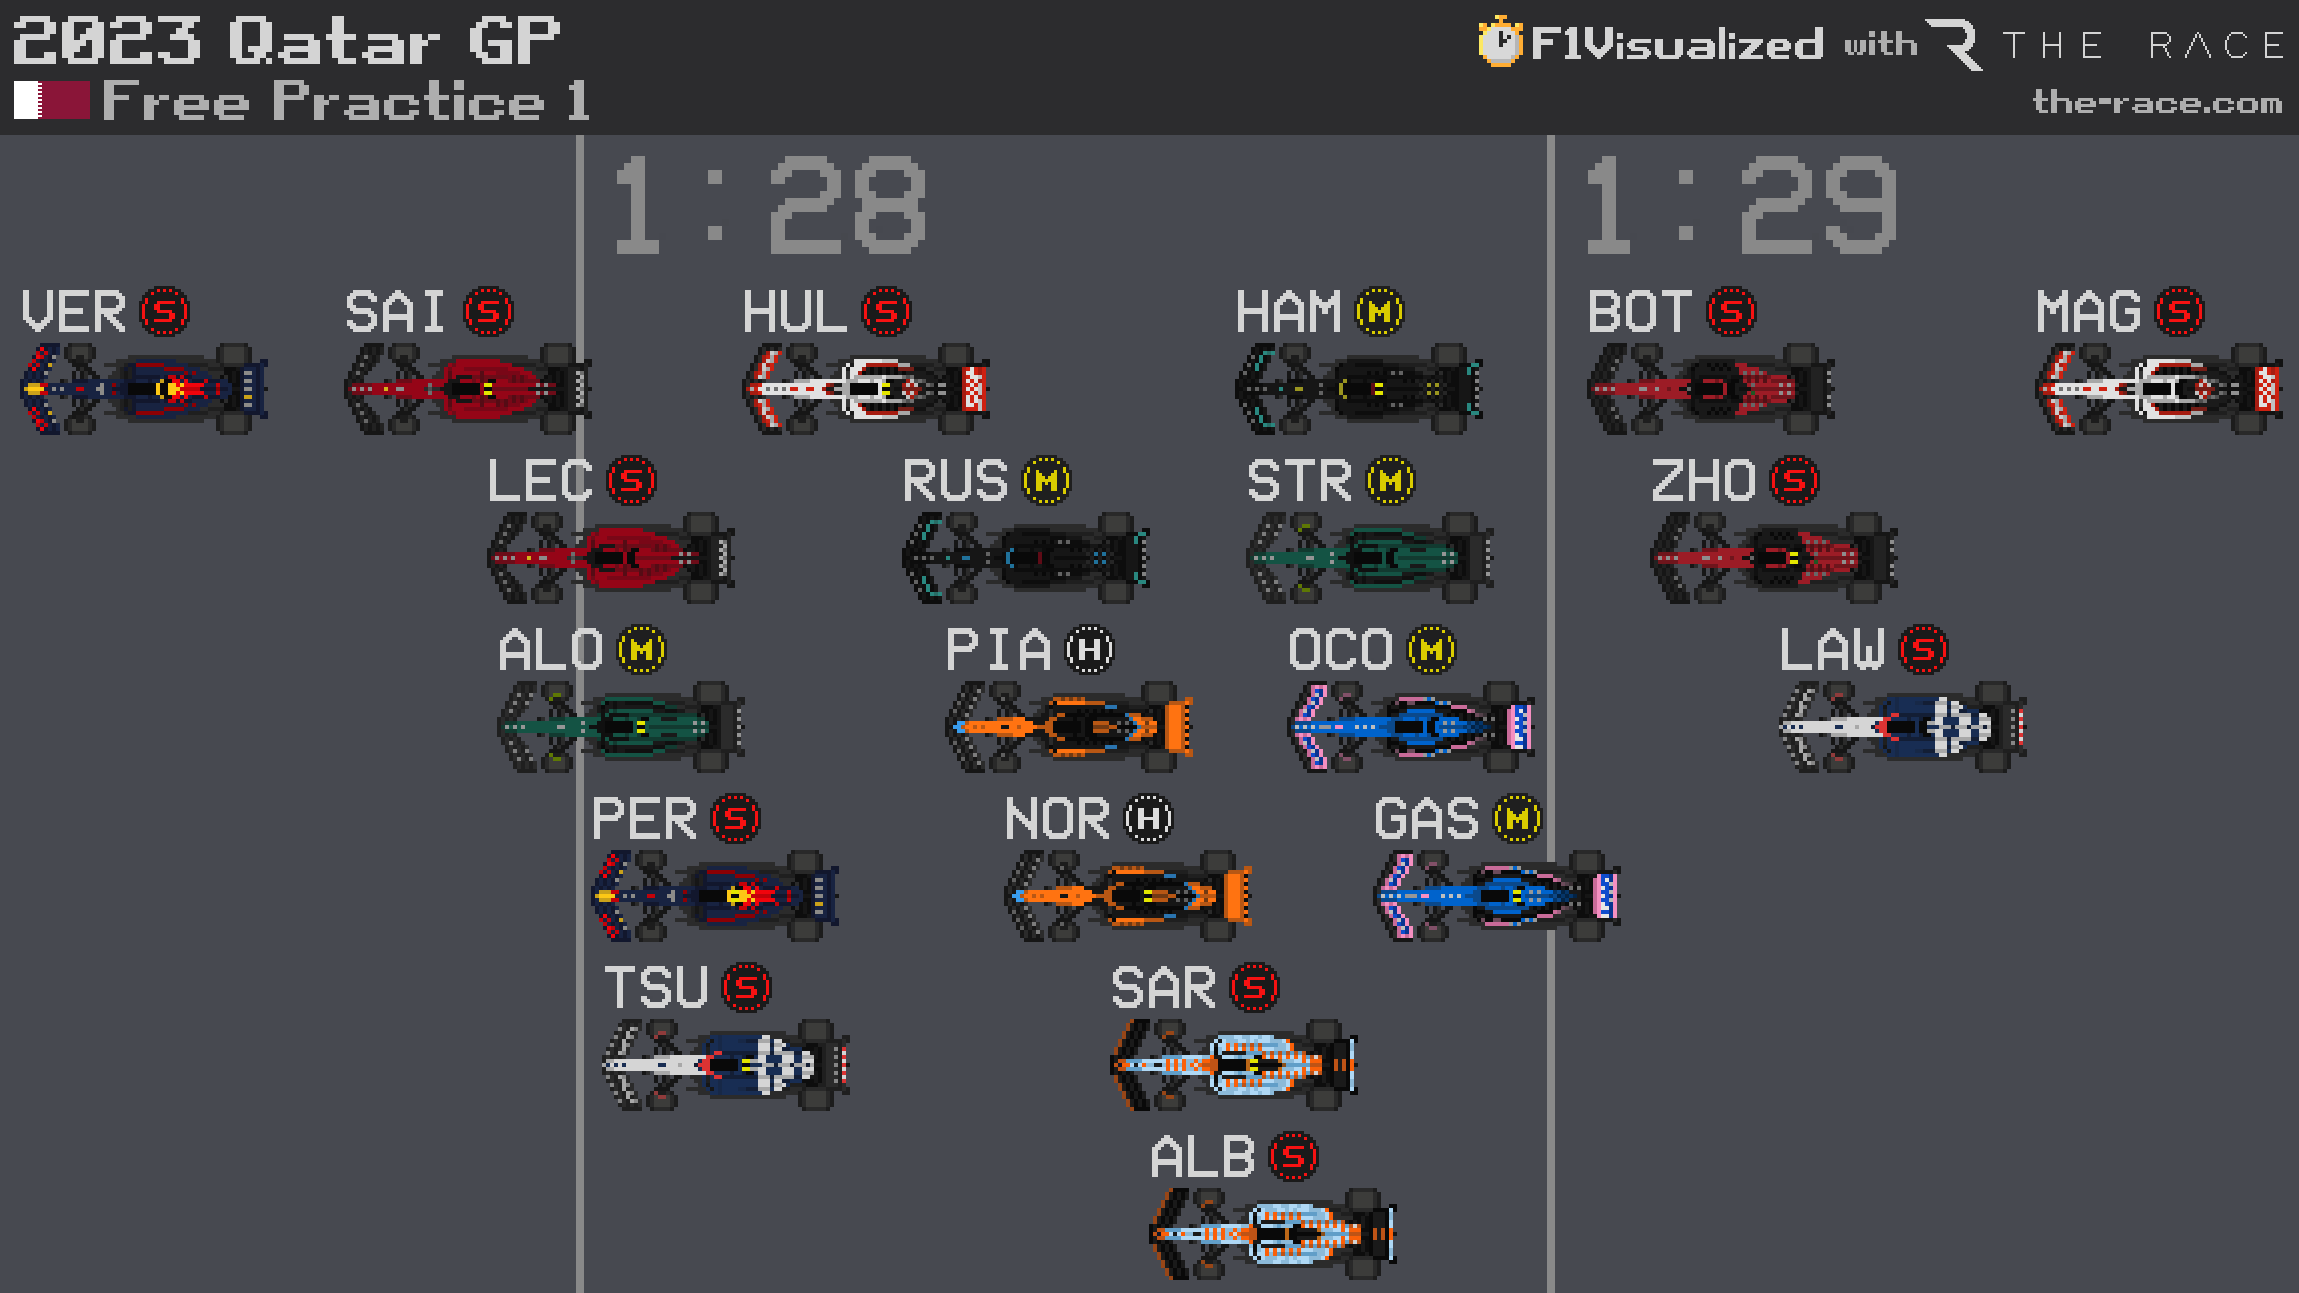 Qatar GP practice results